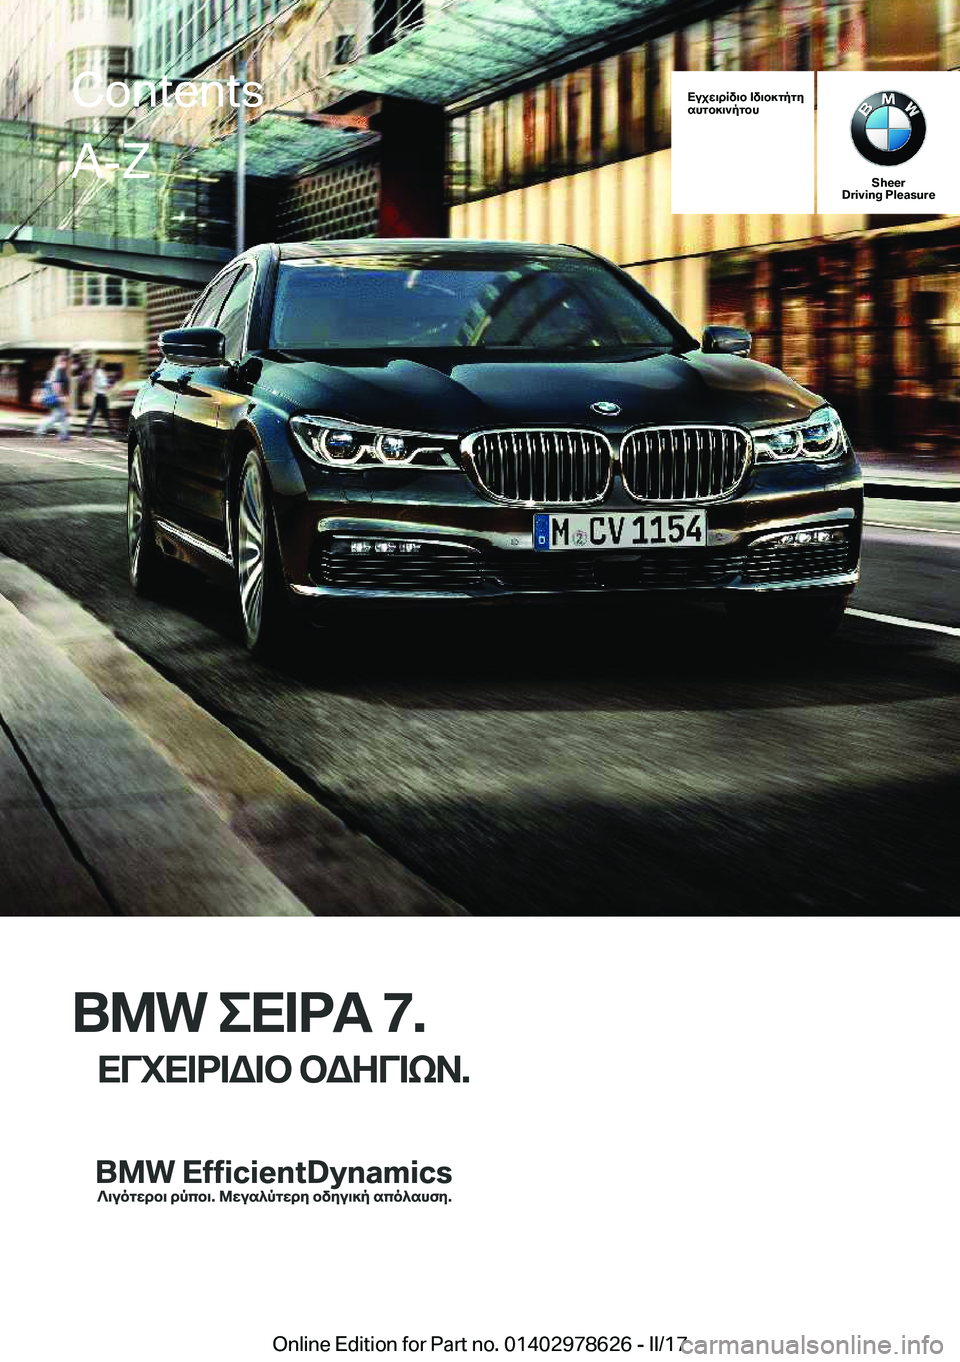 BMW 7 SERIES 2018  ΟΔΗΓΌΣ ΧΡΉΣΗΣ (in Greek) Xujw\dRv\b�=v\b]gpgy
shgb]\`pgbh
�S�h�e�e�r
�D�r�i�v�i�n�g��P�l�e�a�s�u�r�e
�B�M�W�eX=dT��7�.
XViX=d=W=b�bW;V=kA�.
�C�o�n�t�e�n�t�s�A�-�Z
�O�n�